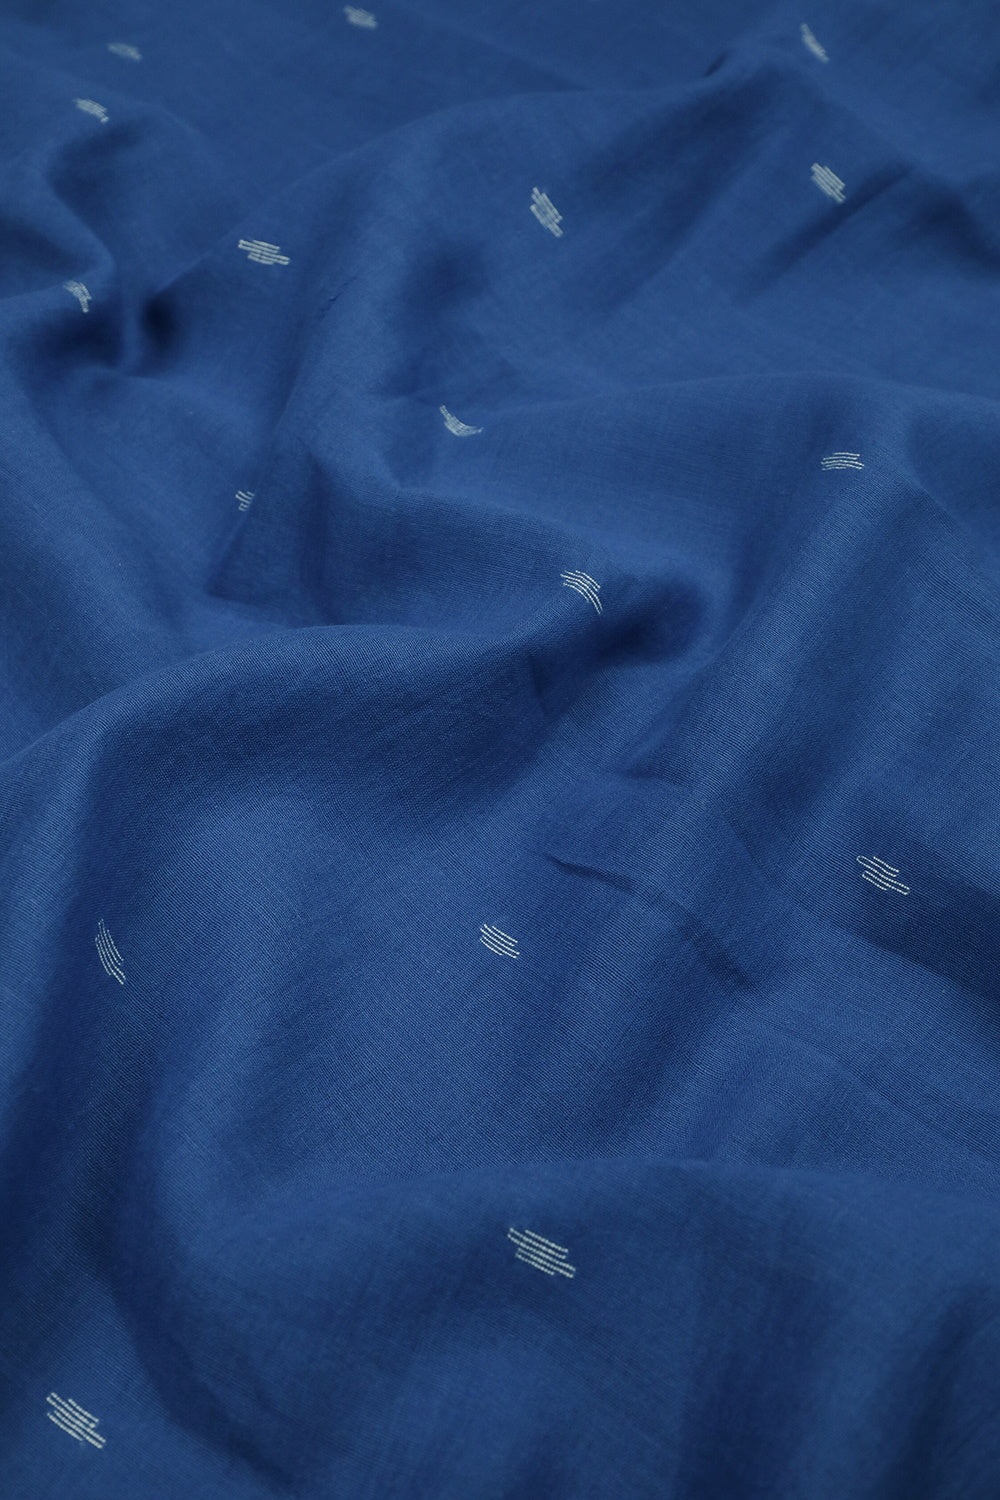 Tiny Butta on Dark Blue Jamdani Cotton Fabric